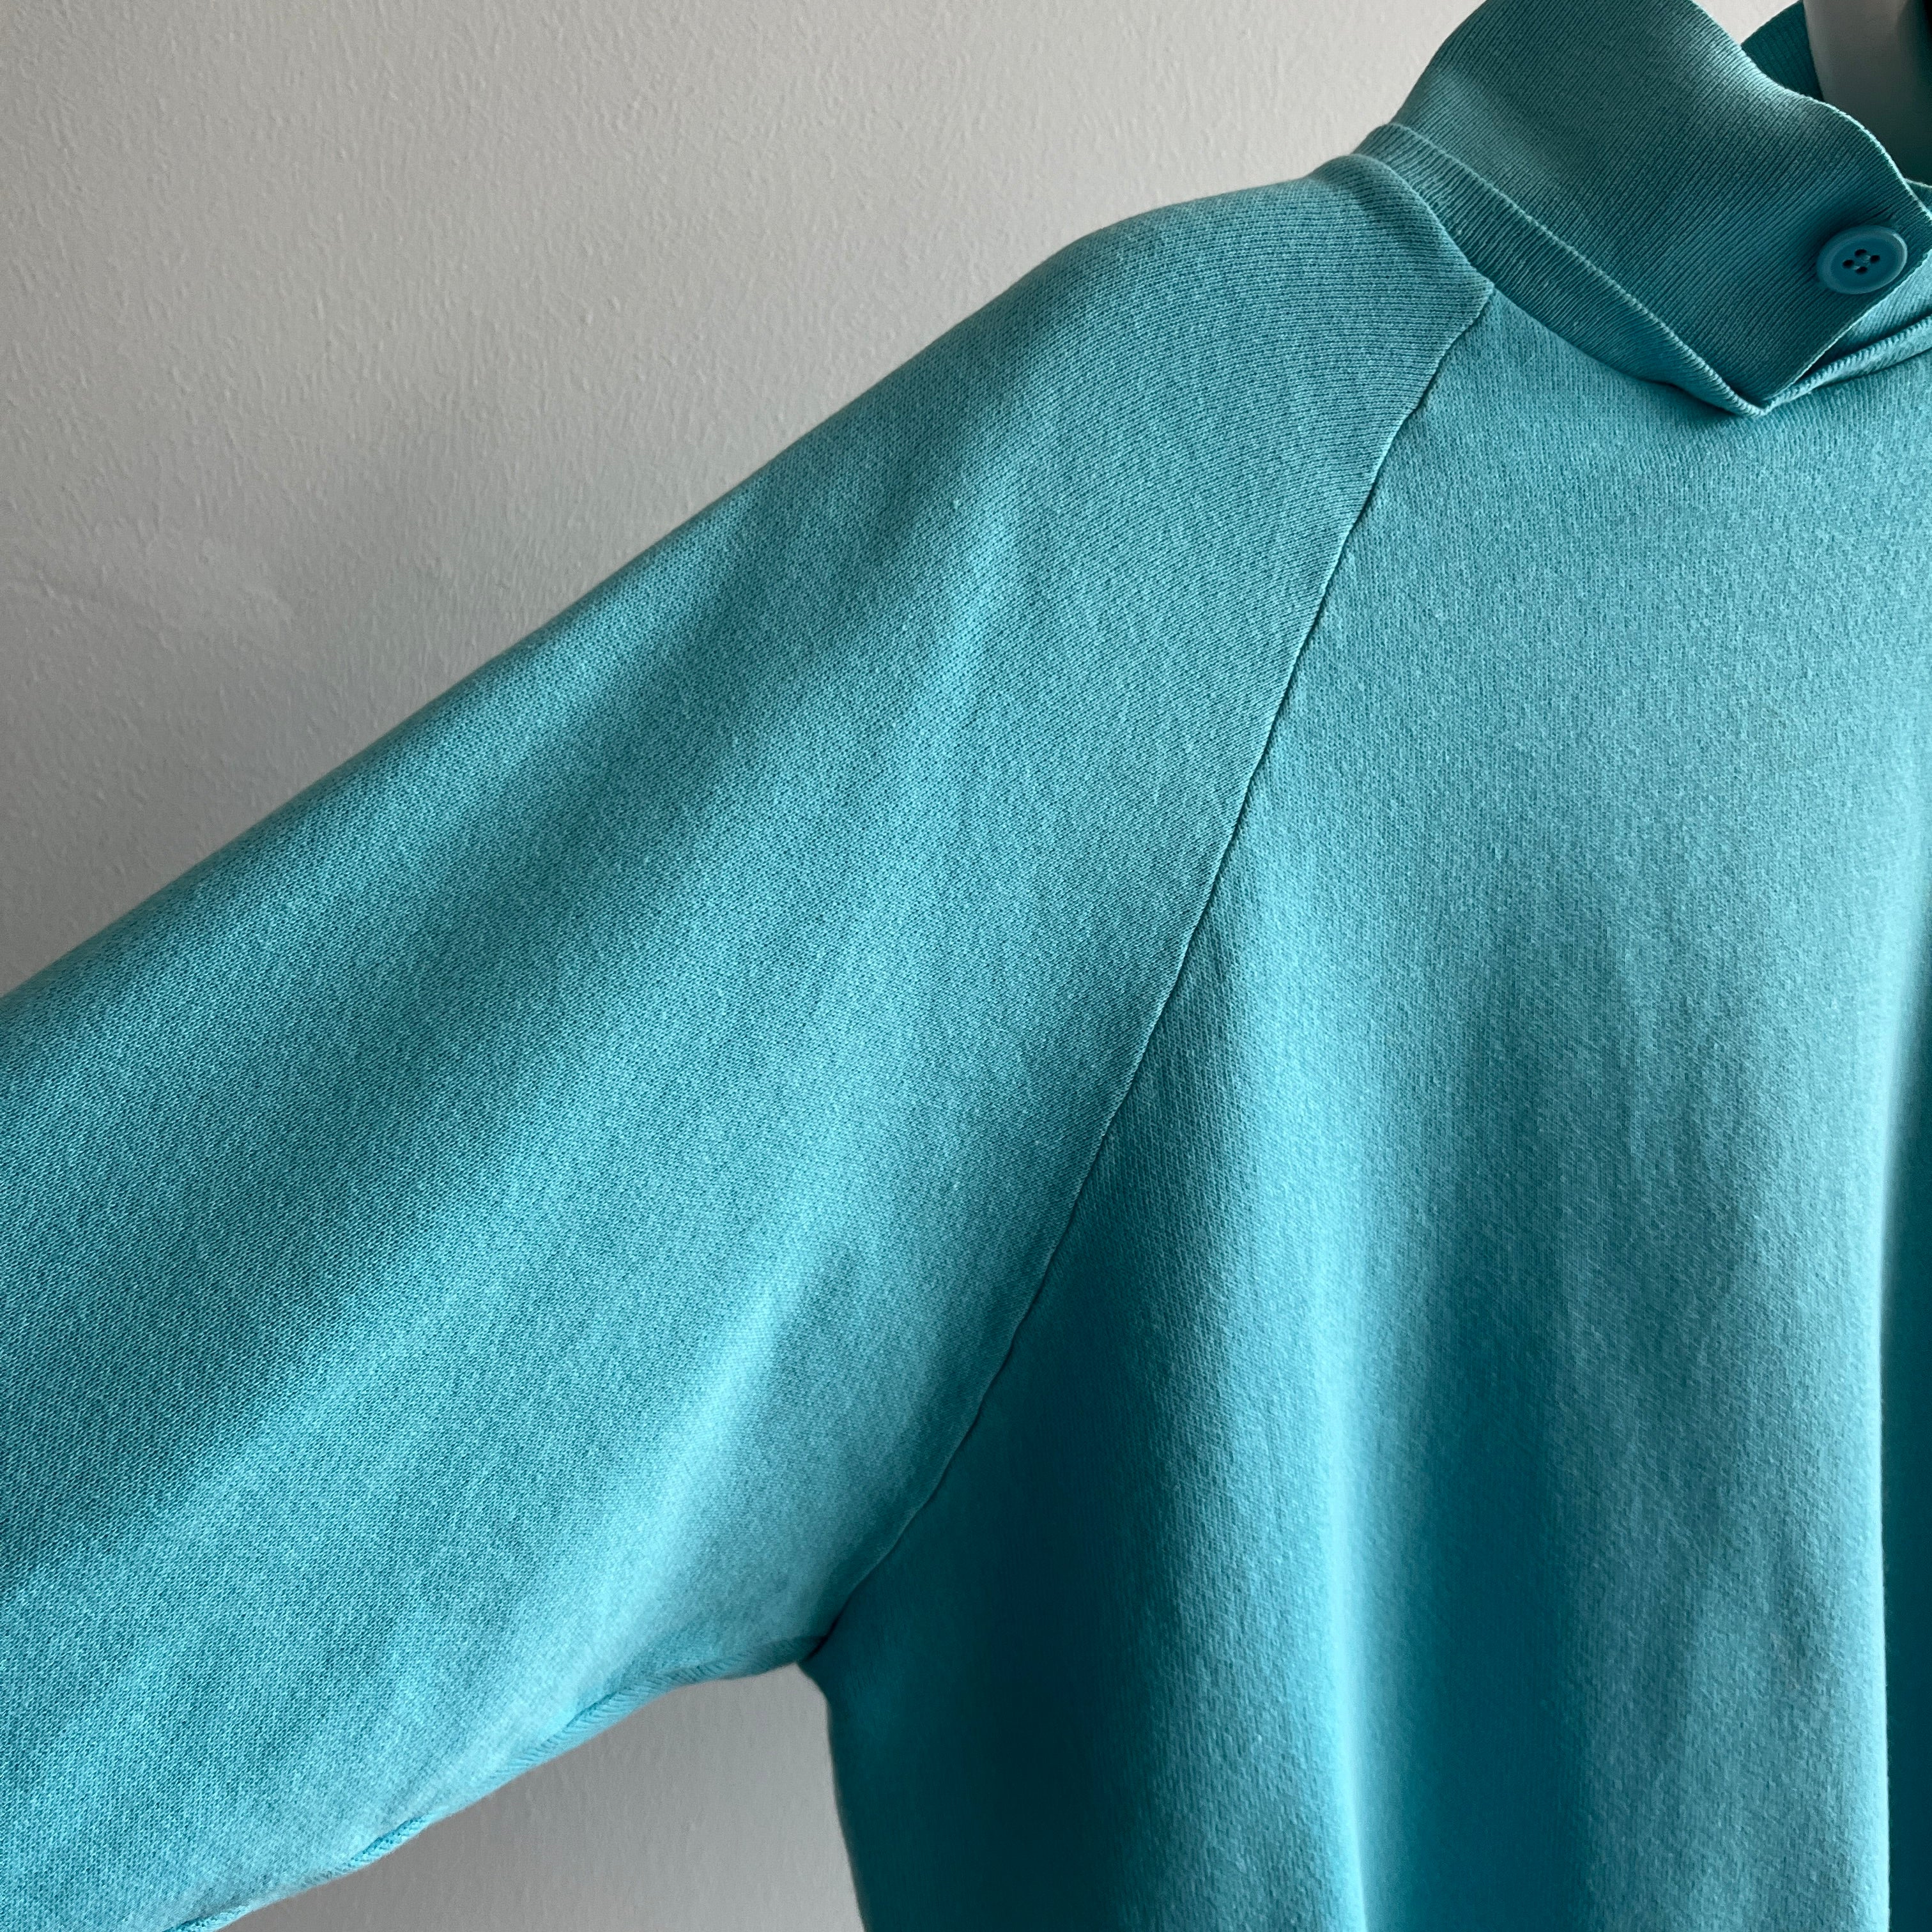 1980s Aqua Collared Sweatshirt with a Single Button